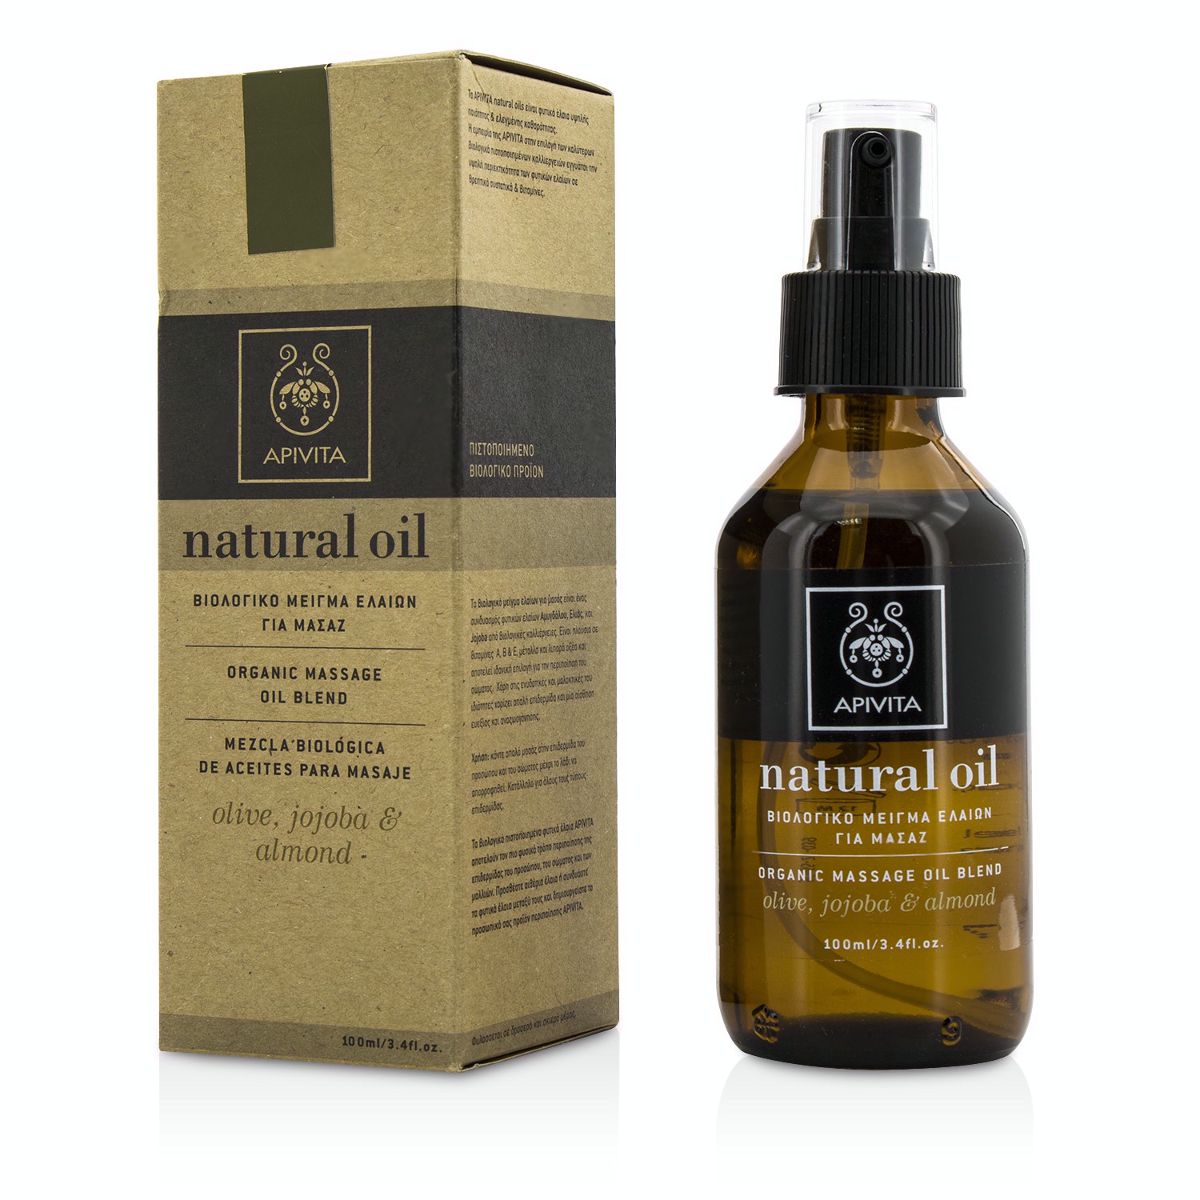 Natural Oil - Olive Jojoba  Almond Organic Massage Oil Blend Apivita Image